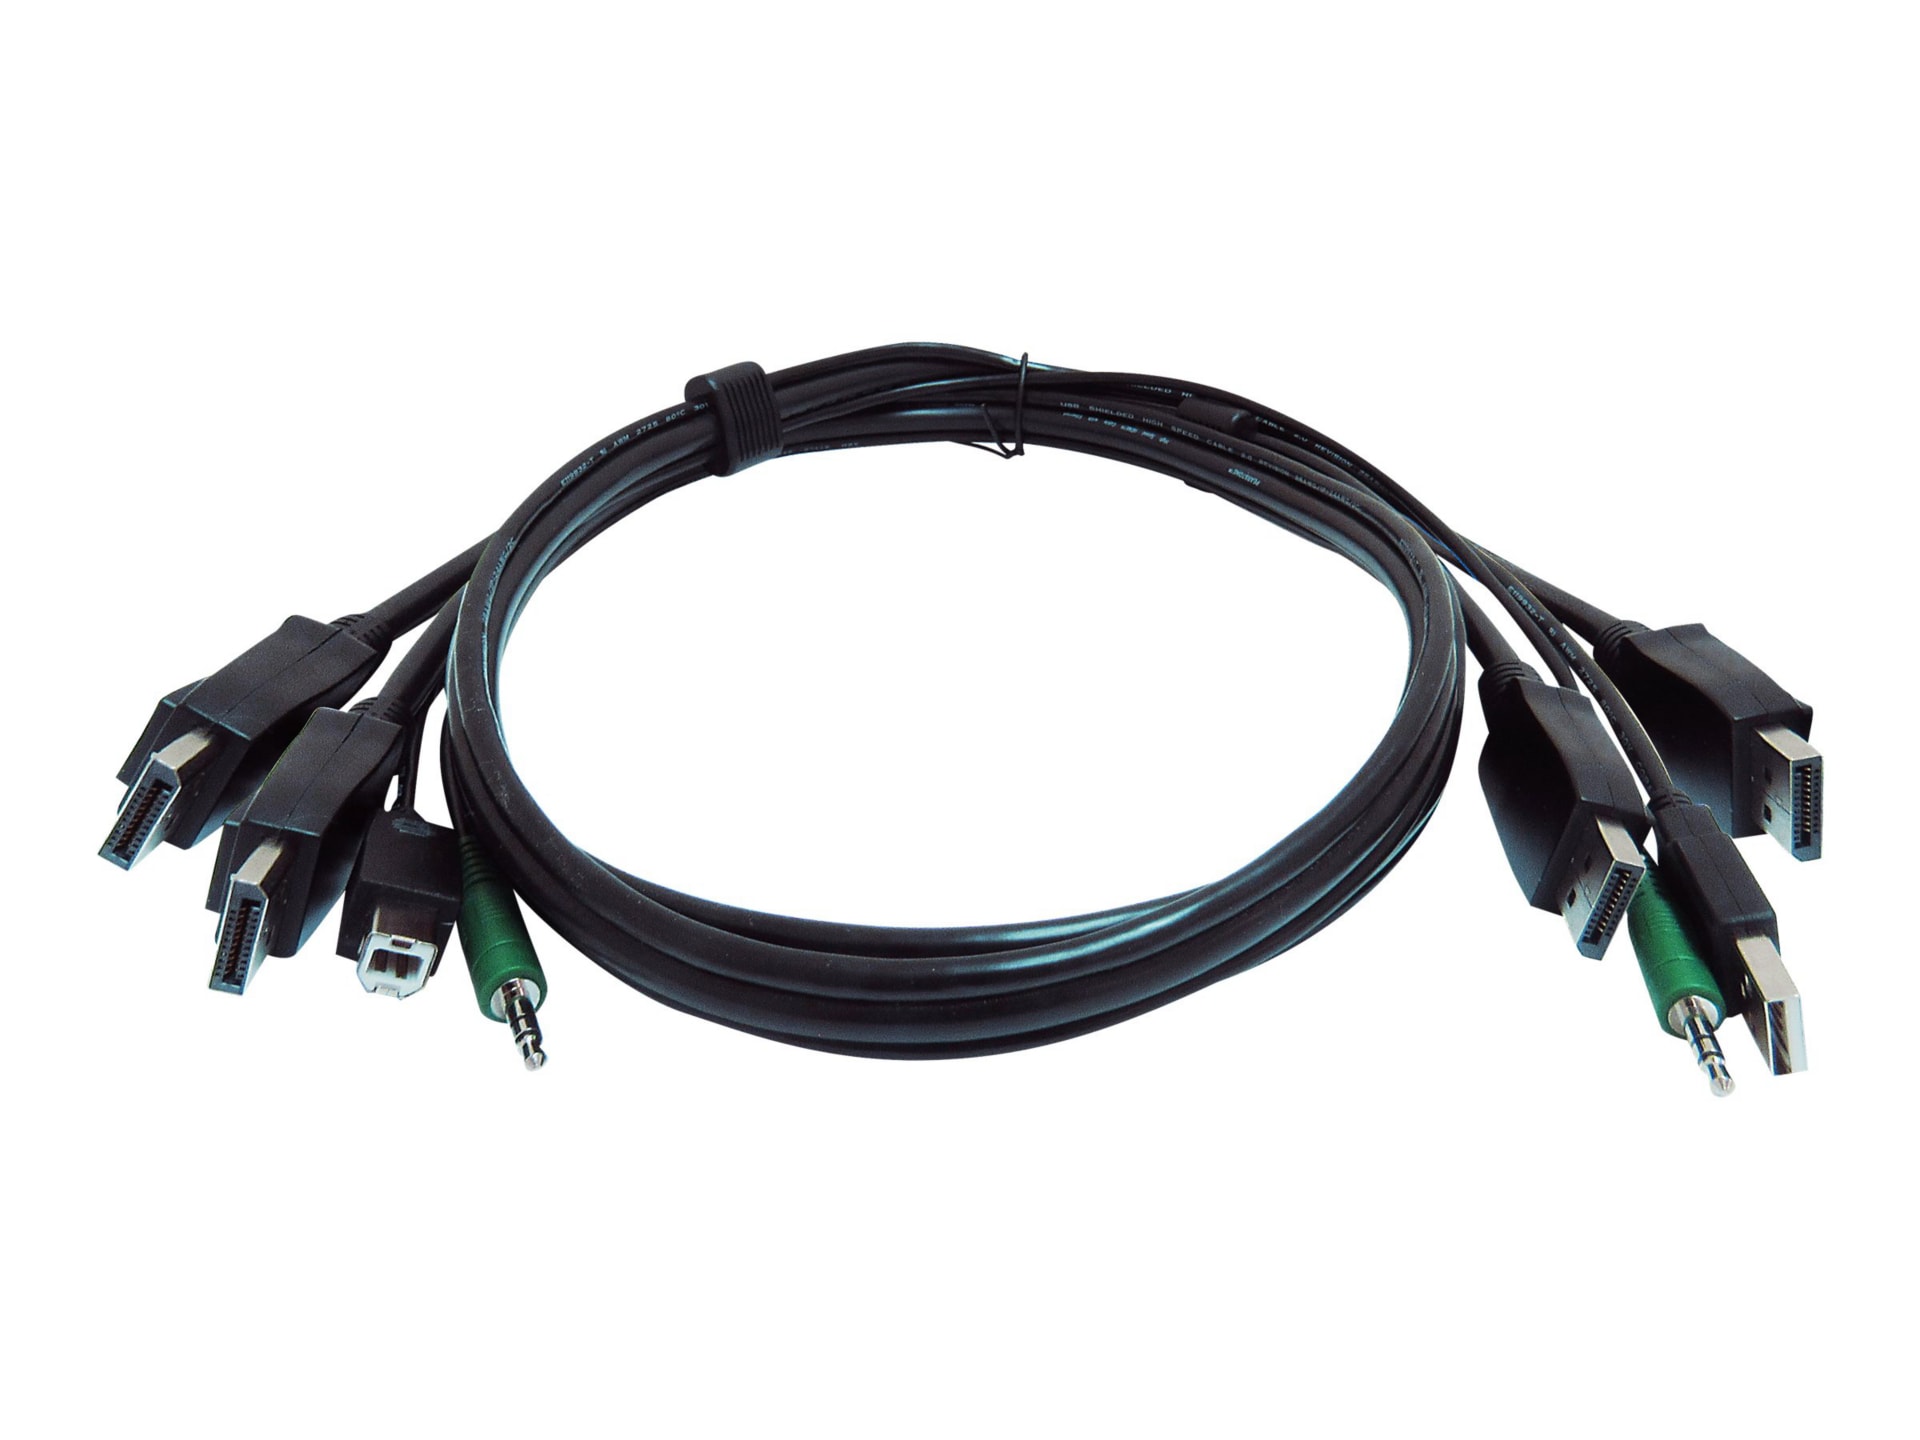 Black Box - video / USB / audio cable - TAA Compliant - 6 ft